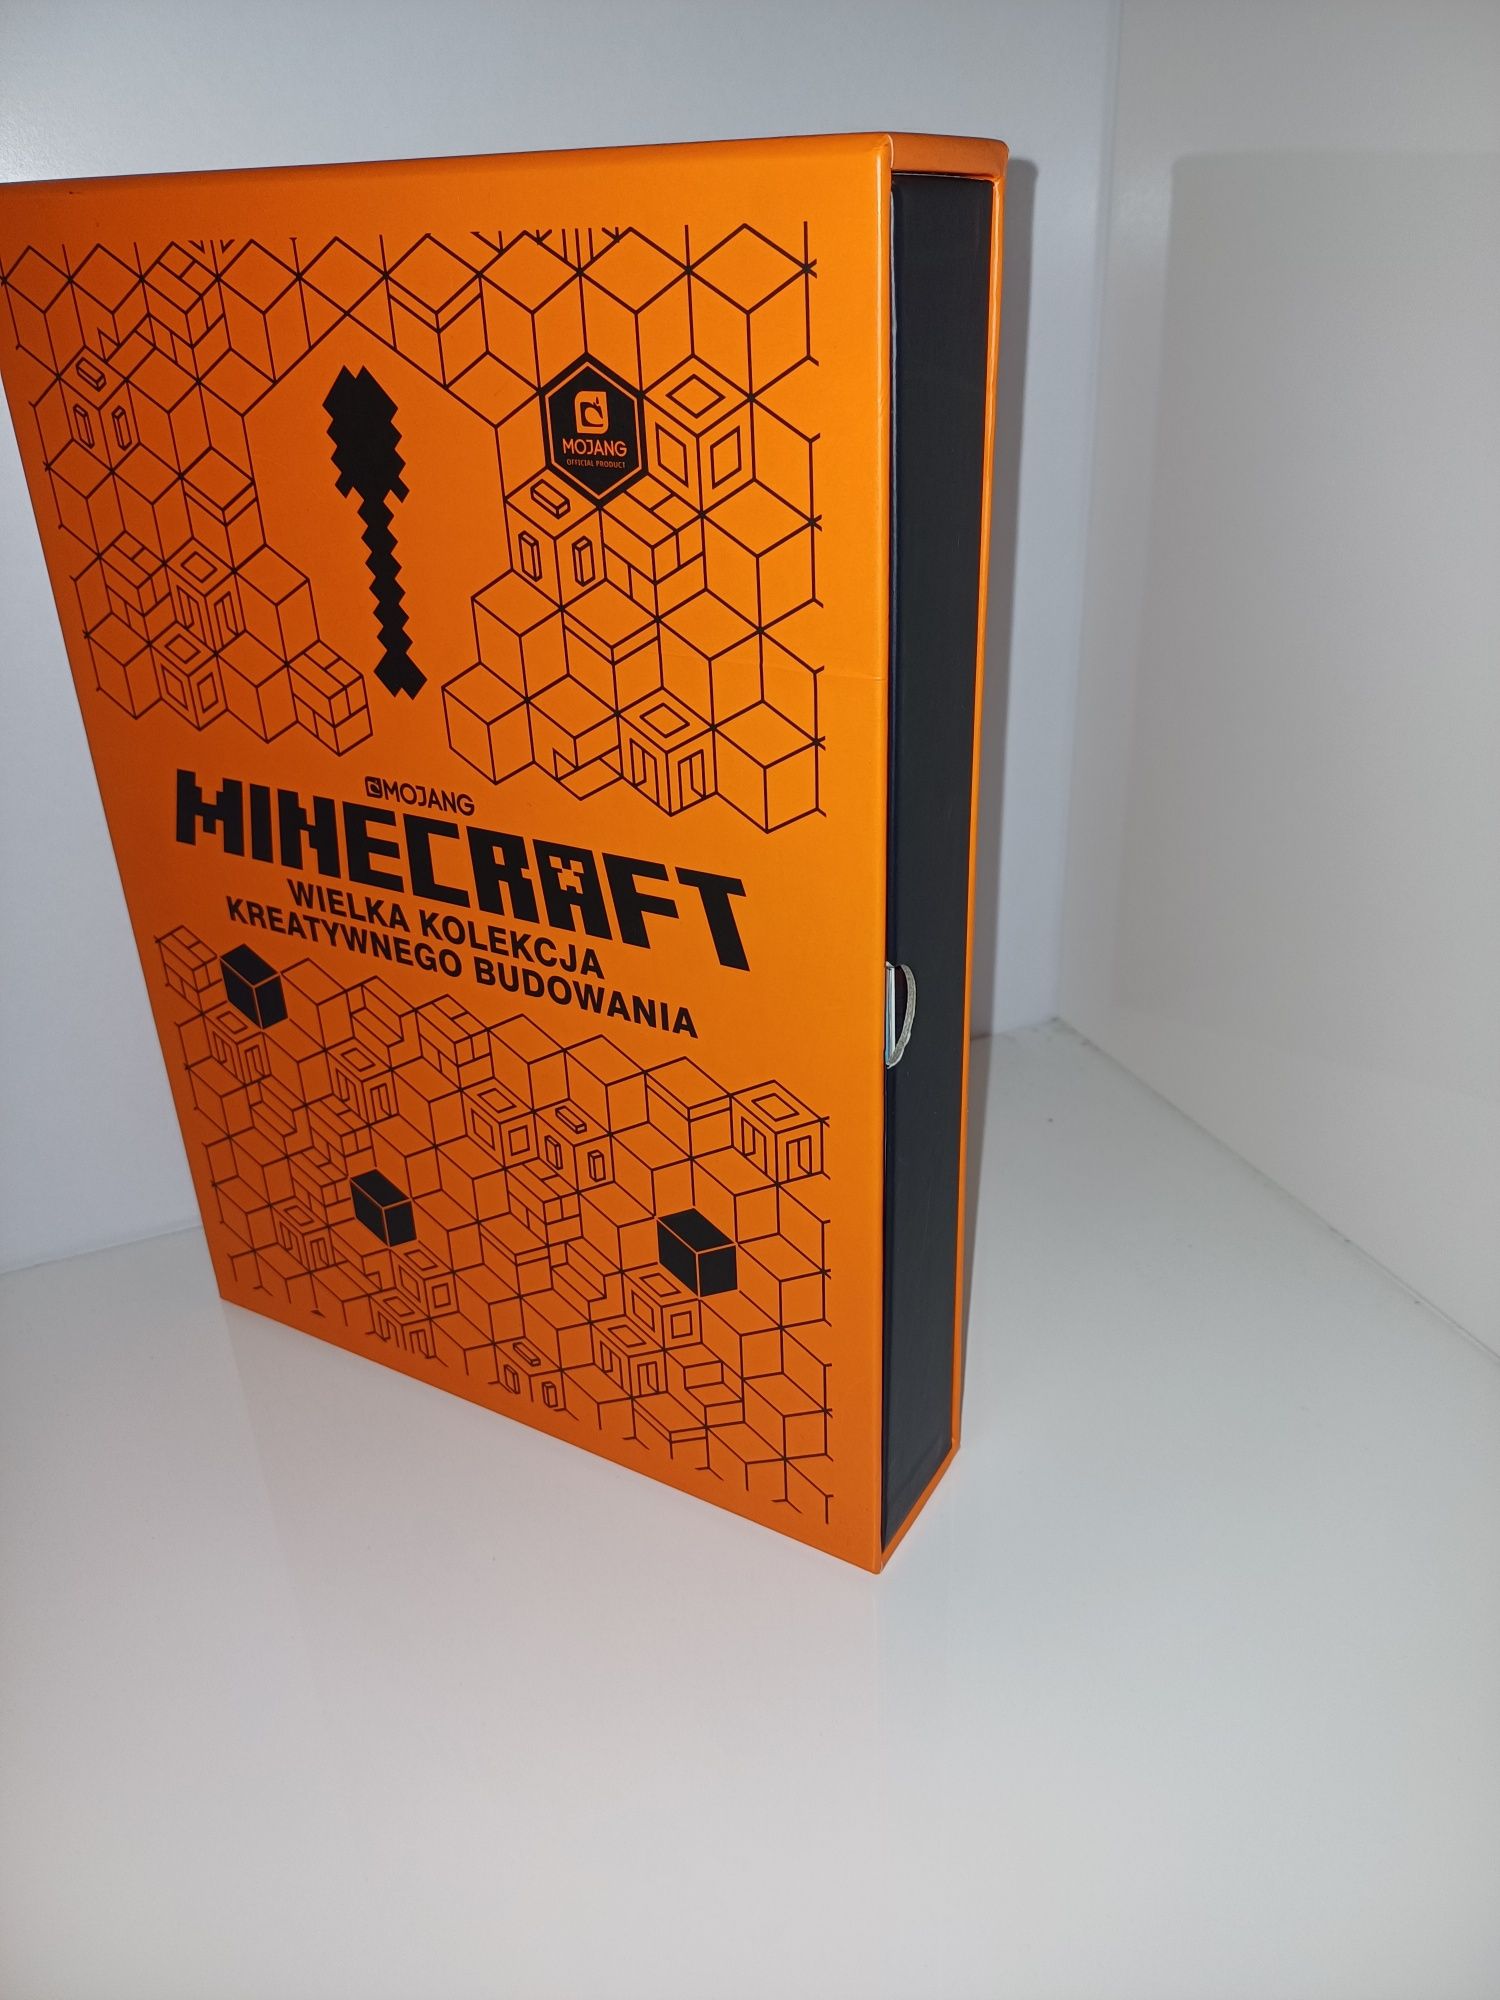 Książki plus plakat Minecraft